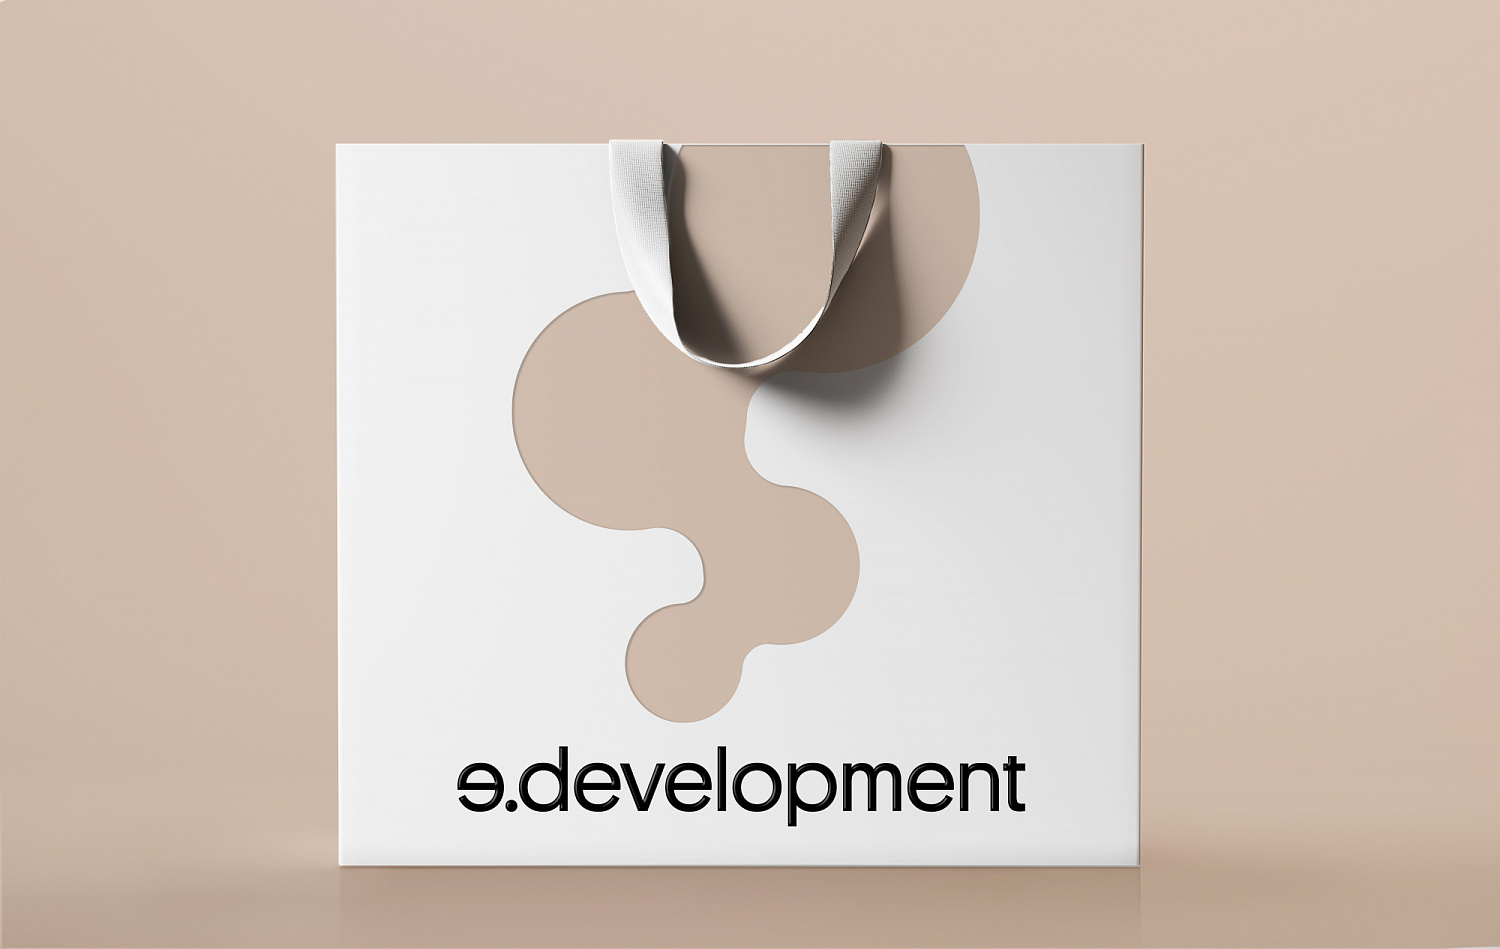 e.development: айдентика бренда загородных кварталов бизнес-класса - Портфолио Depot